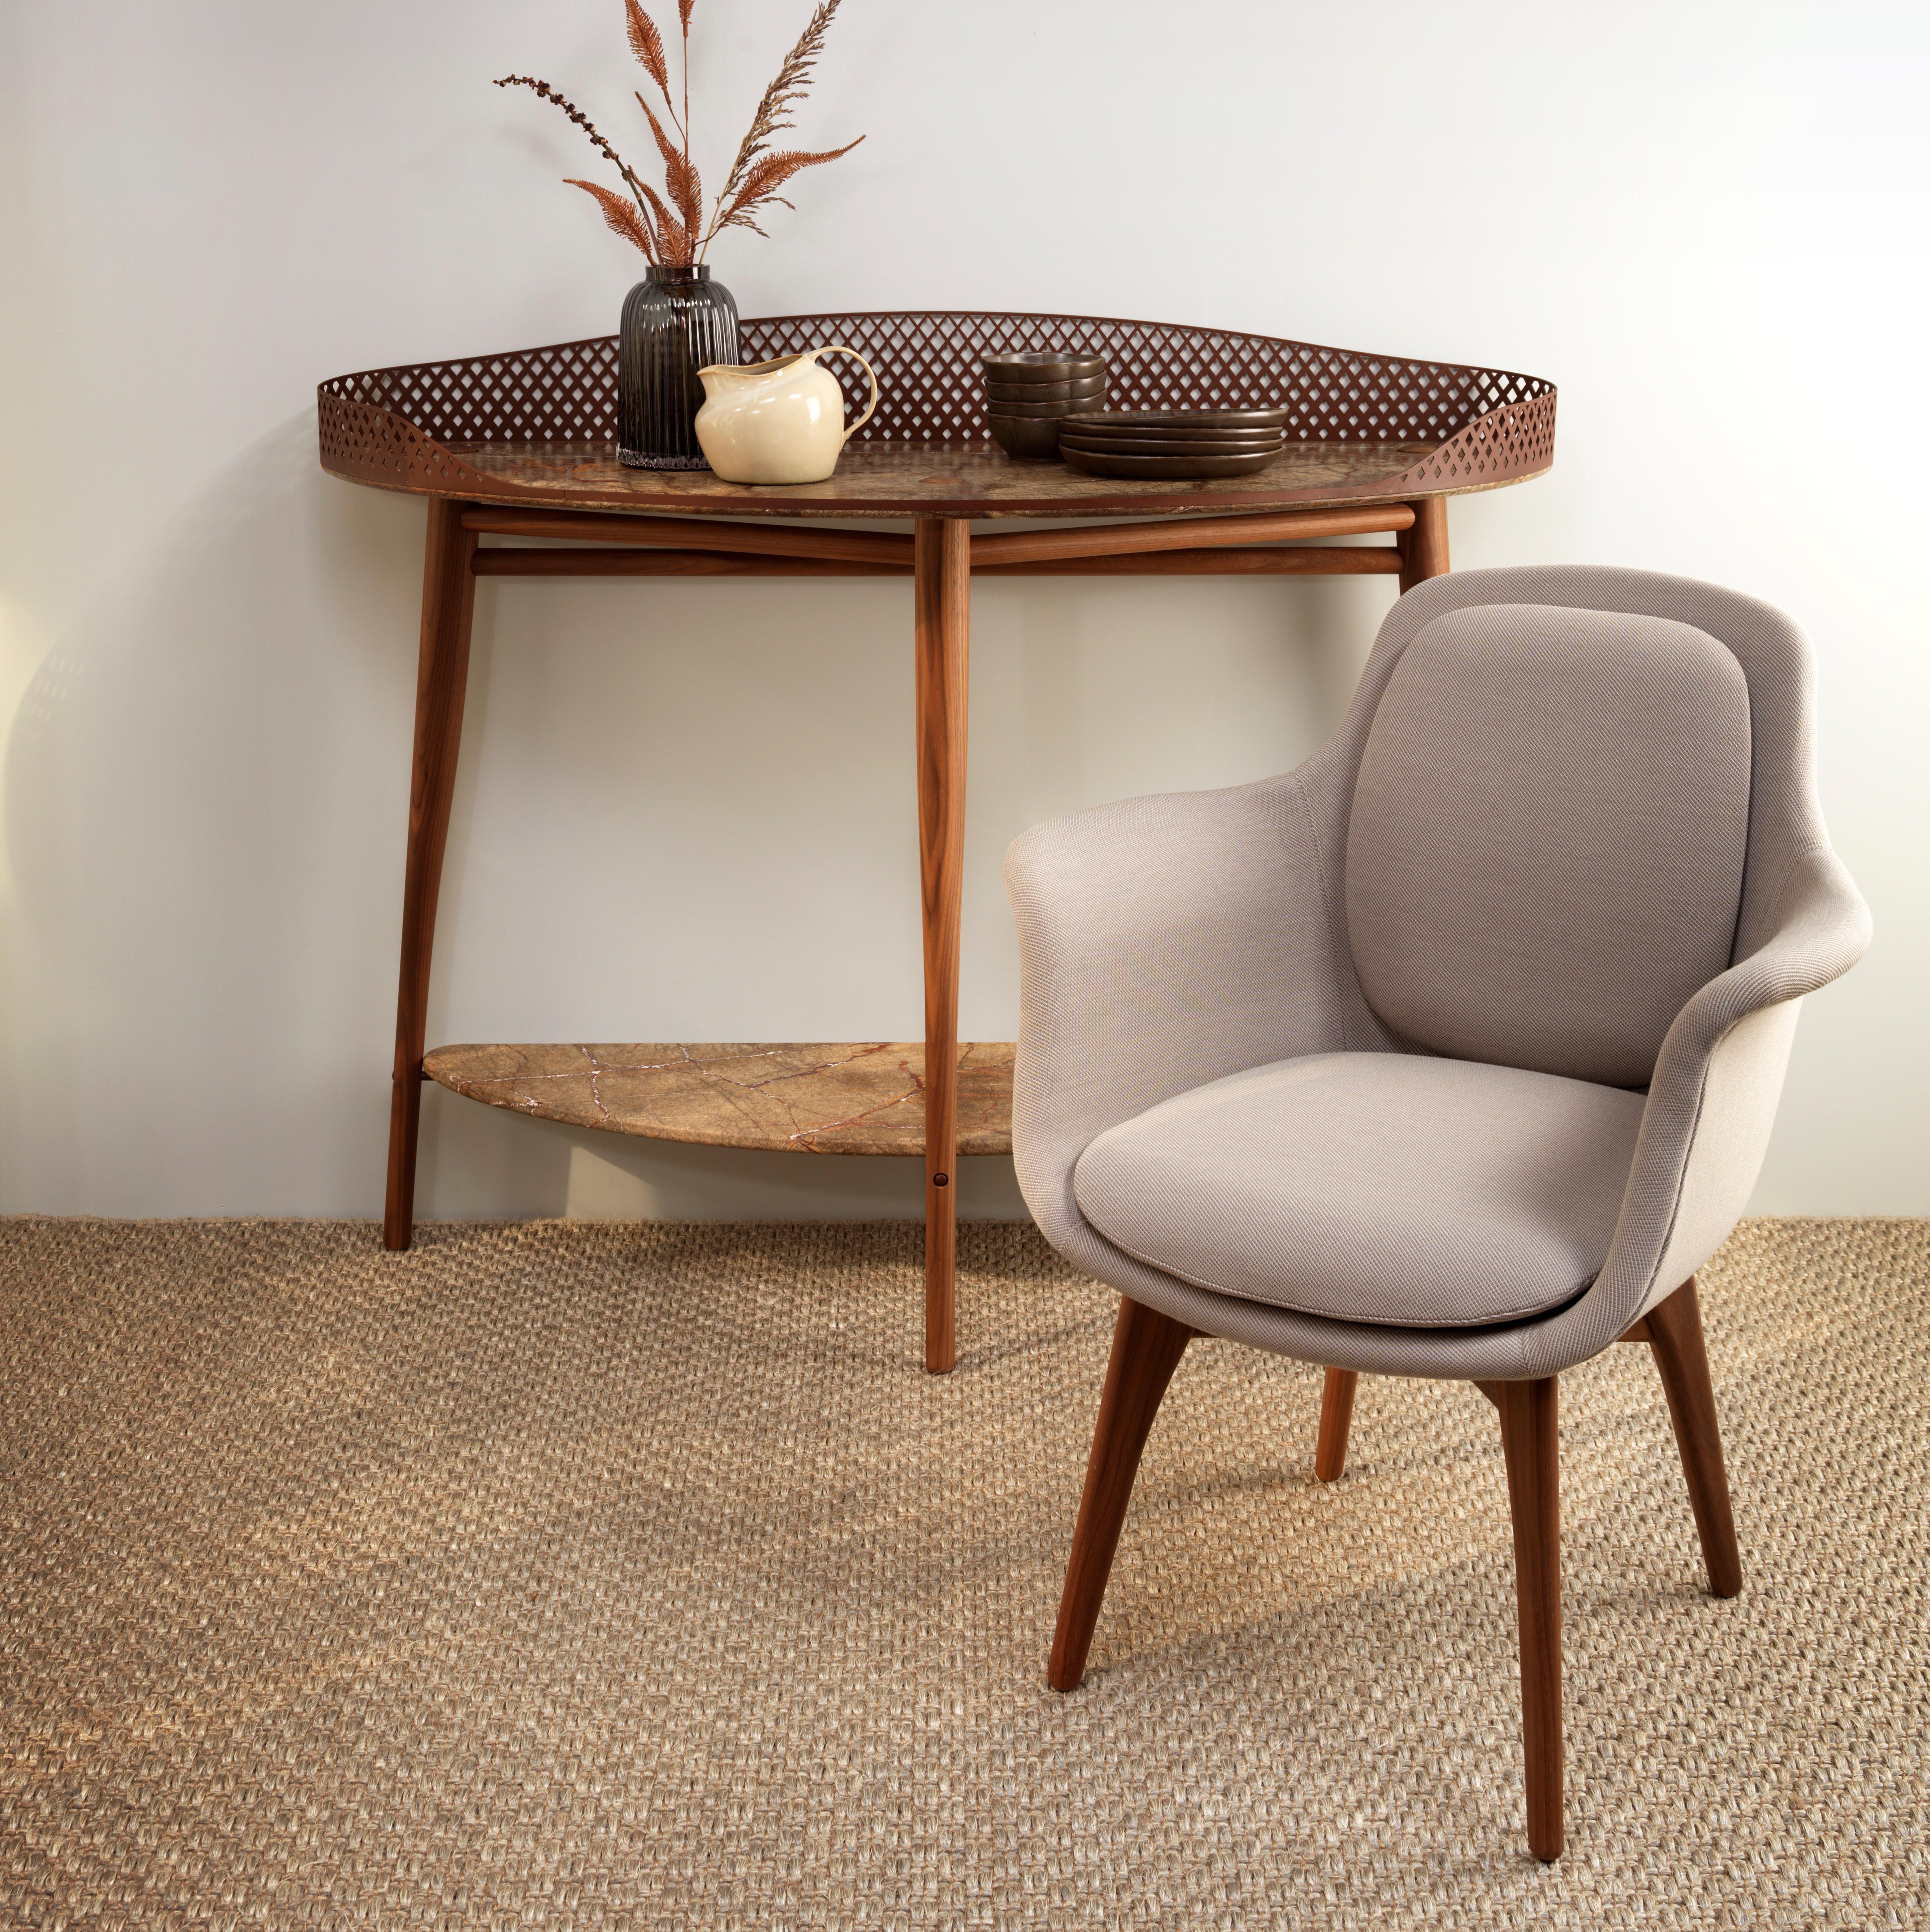 Dutch Revised Chidden – solid walnut dining chair